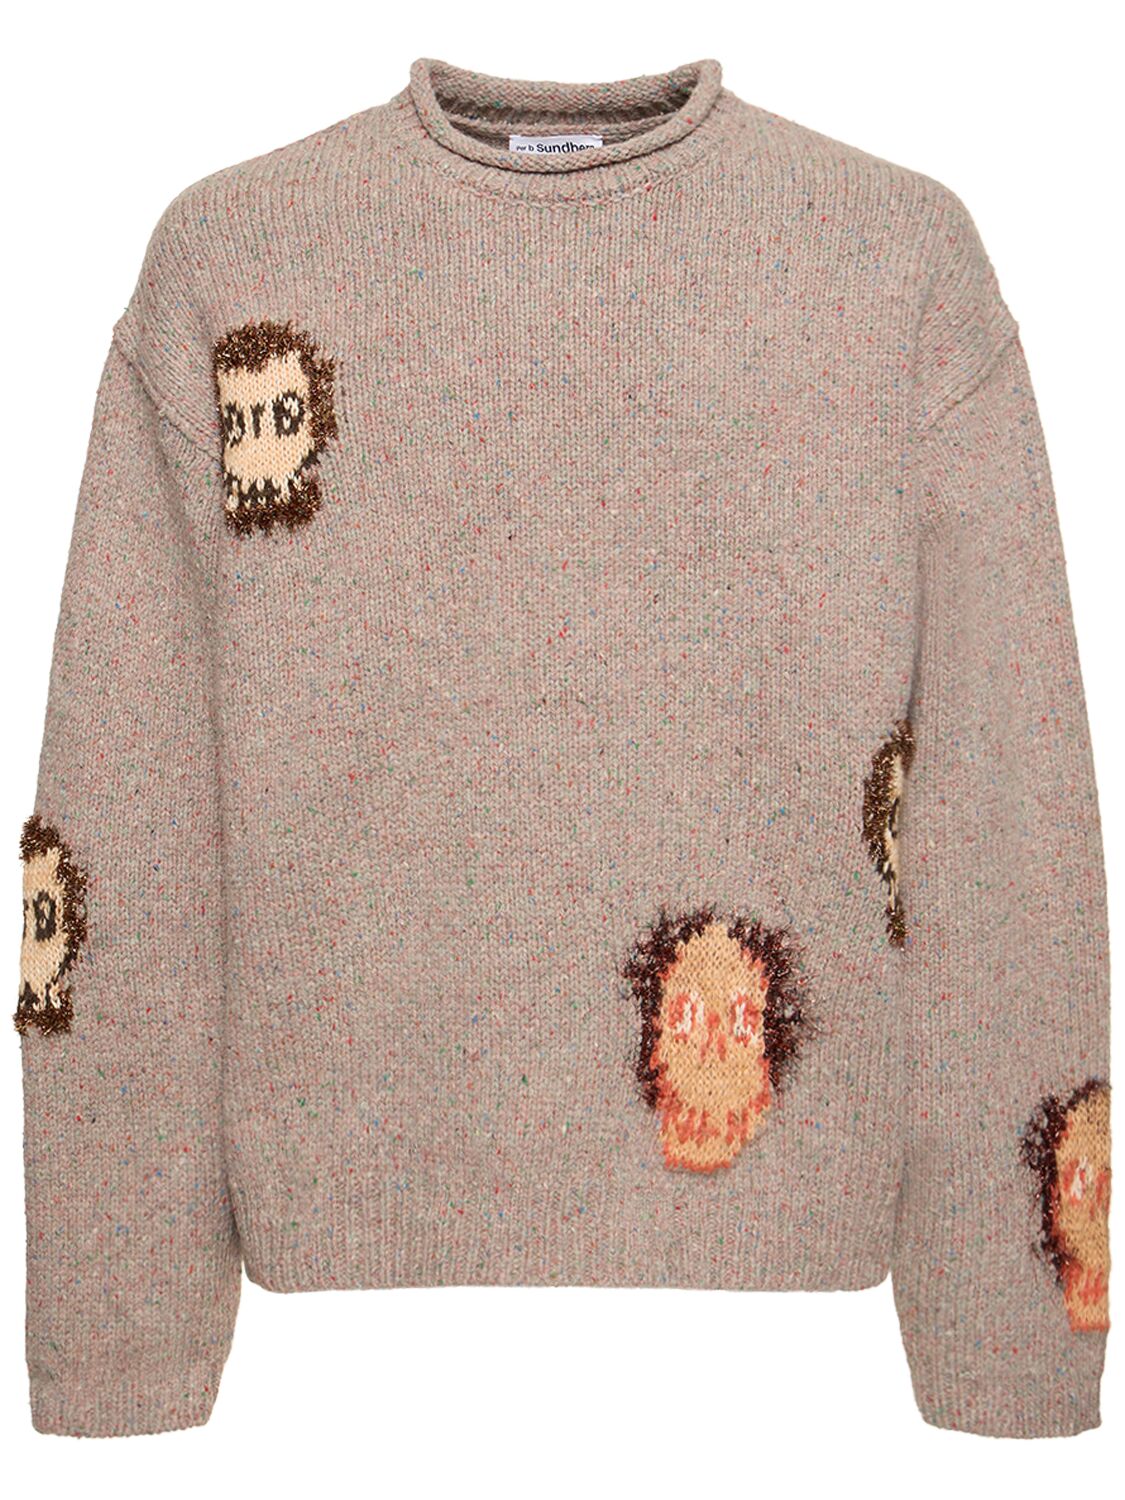 Image of Konegal Skull Wool Blend Sweater